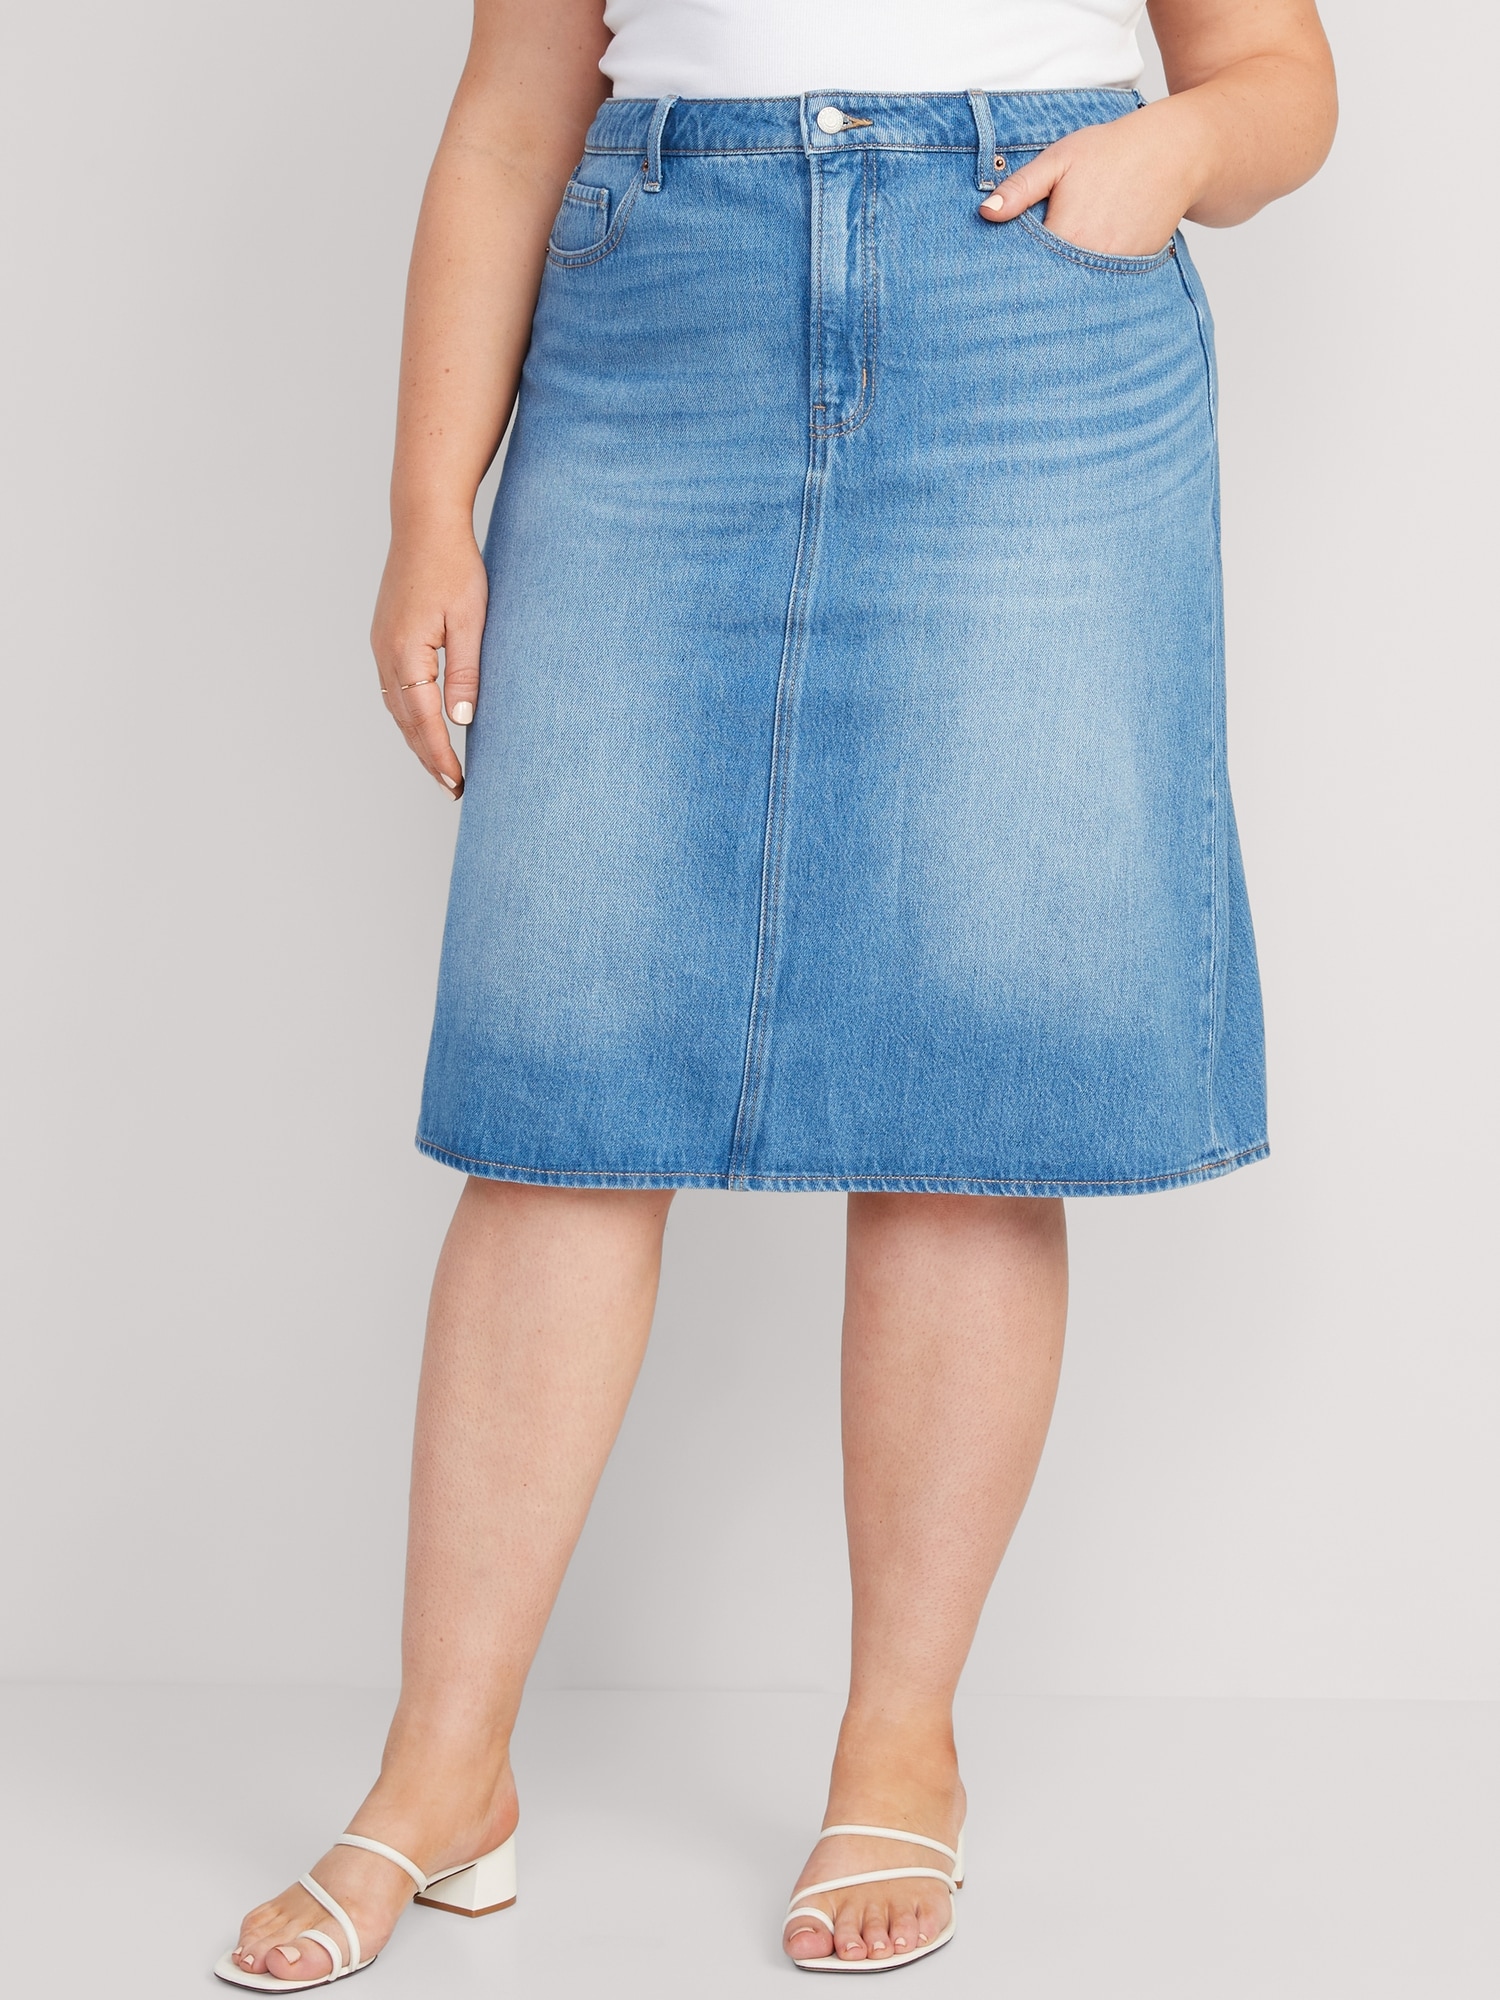 Women Summer Denim Skirts Ripped Hole Irregular Bandage Jeans Skirt Ladies  Casual Skirts | Wish